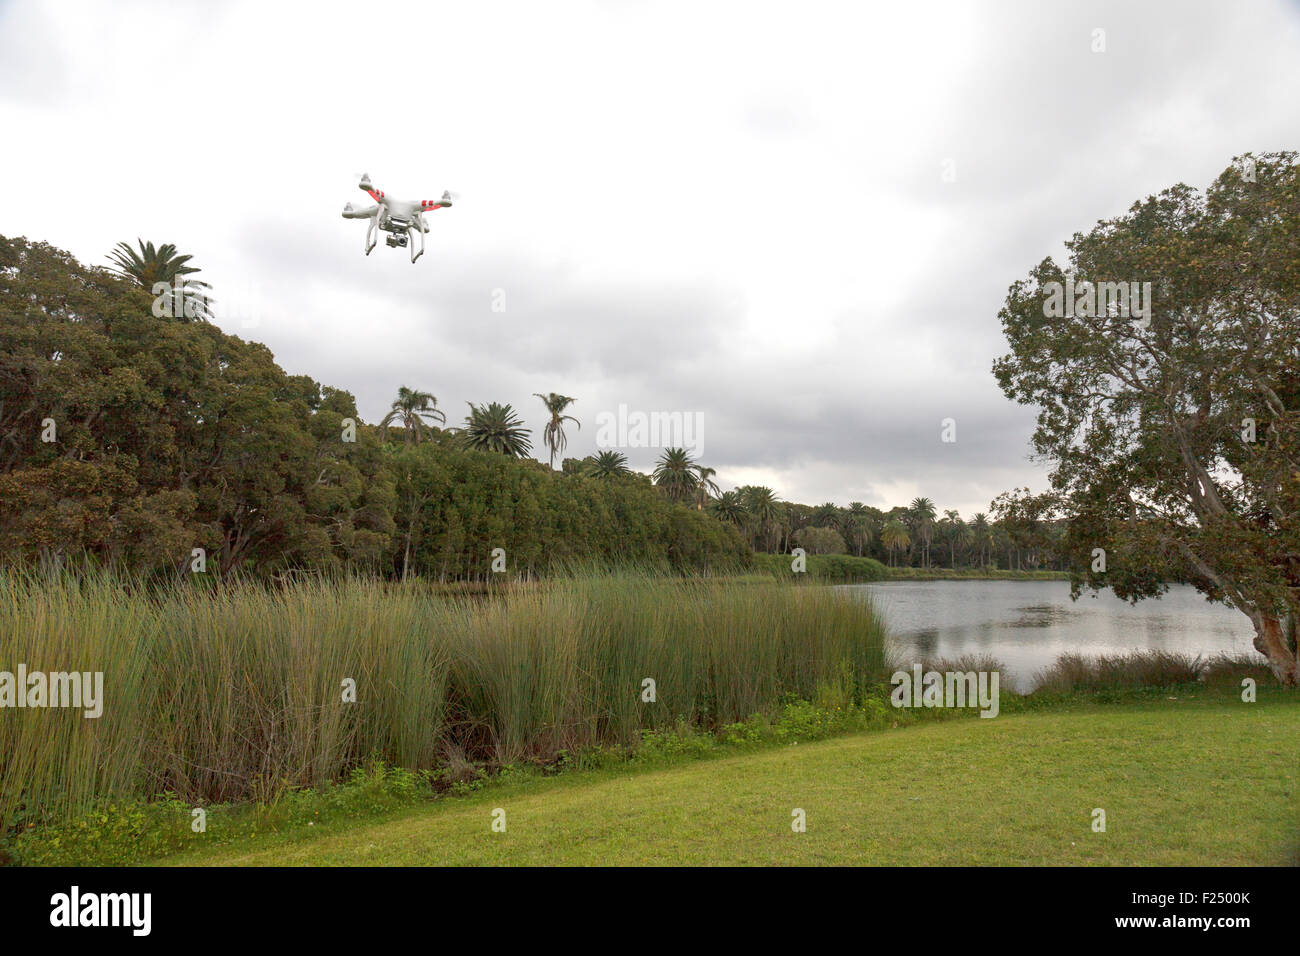 Un vuelo de drone con un gimbal y cámara conectada. Foto de stock